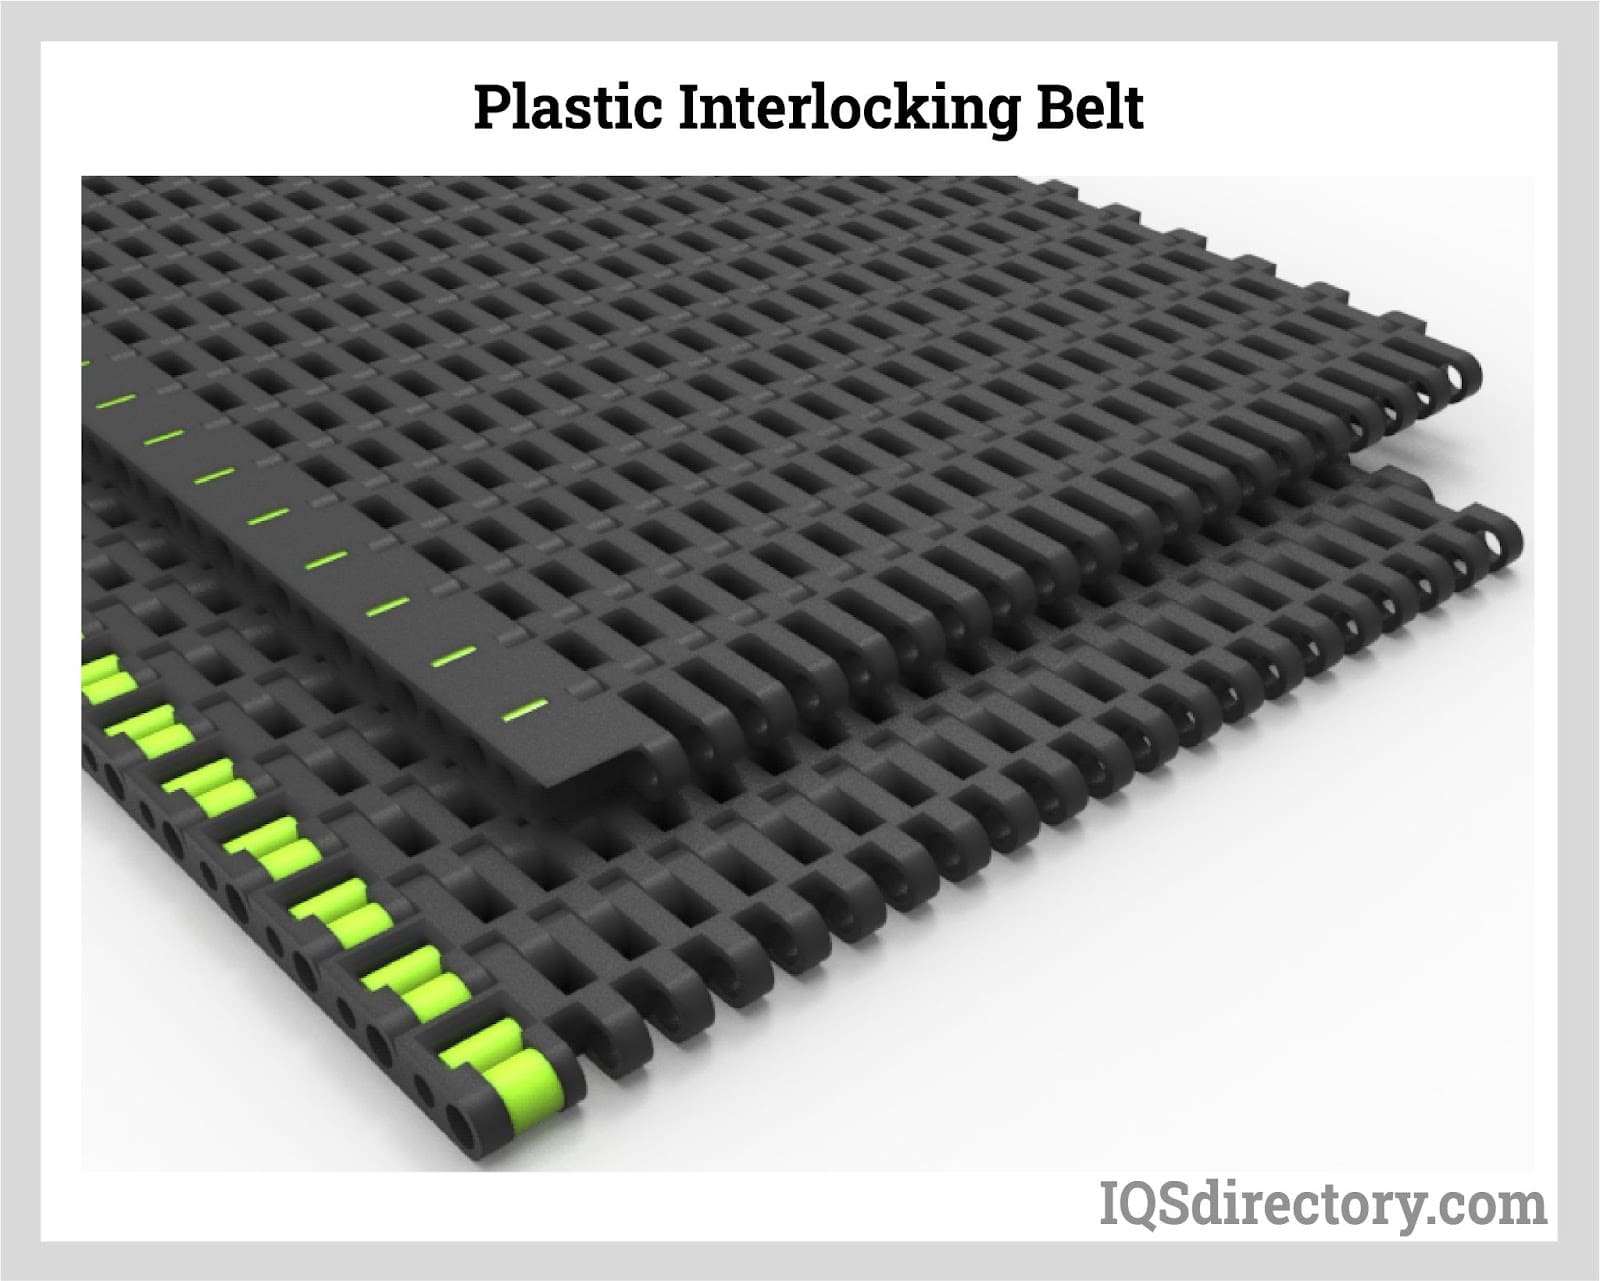 Plastic Interlocking Belt